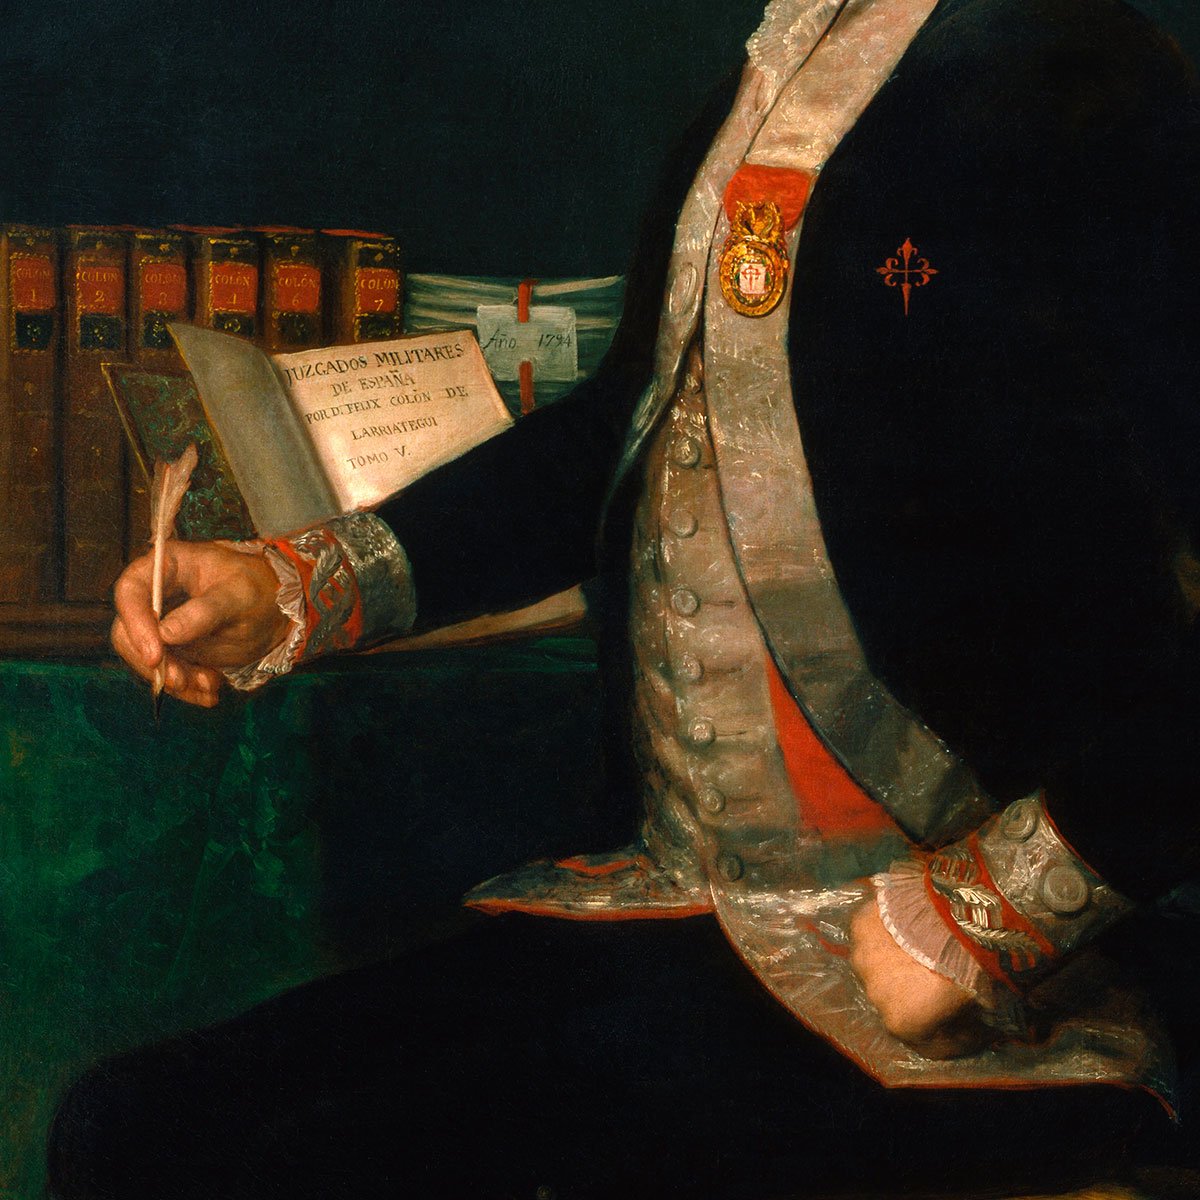 Portrait of Félix Colón by Francisco de Goya